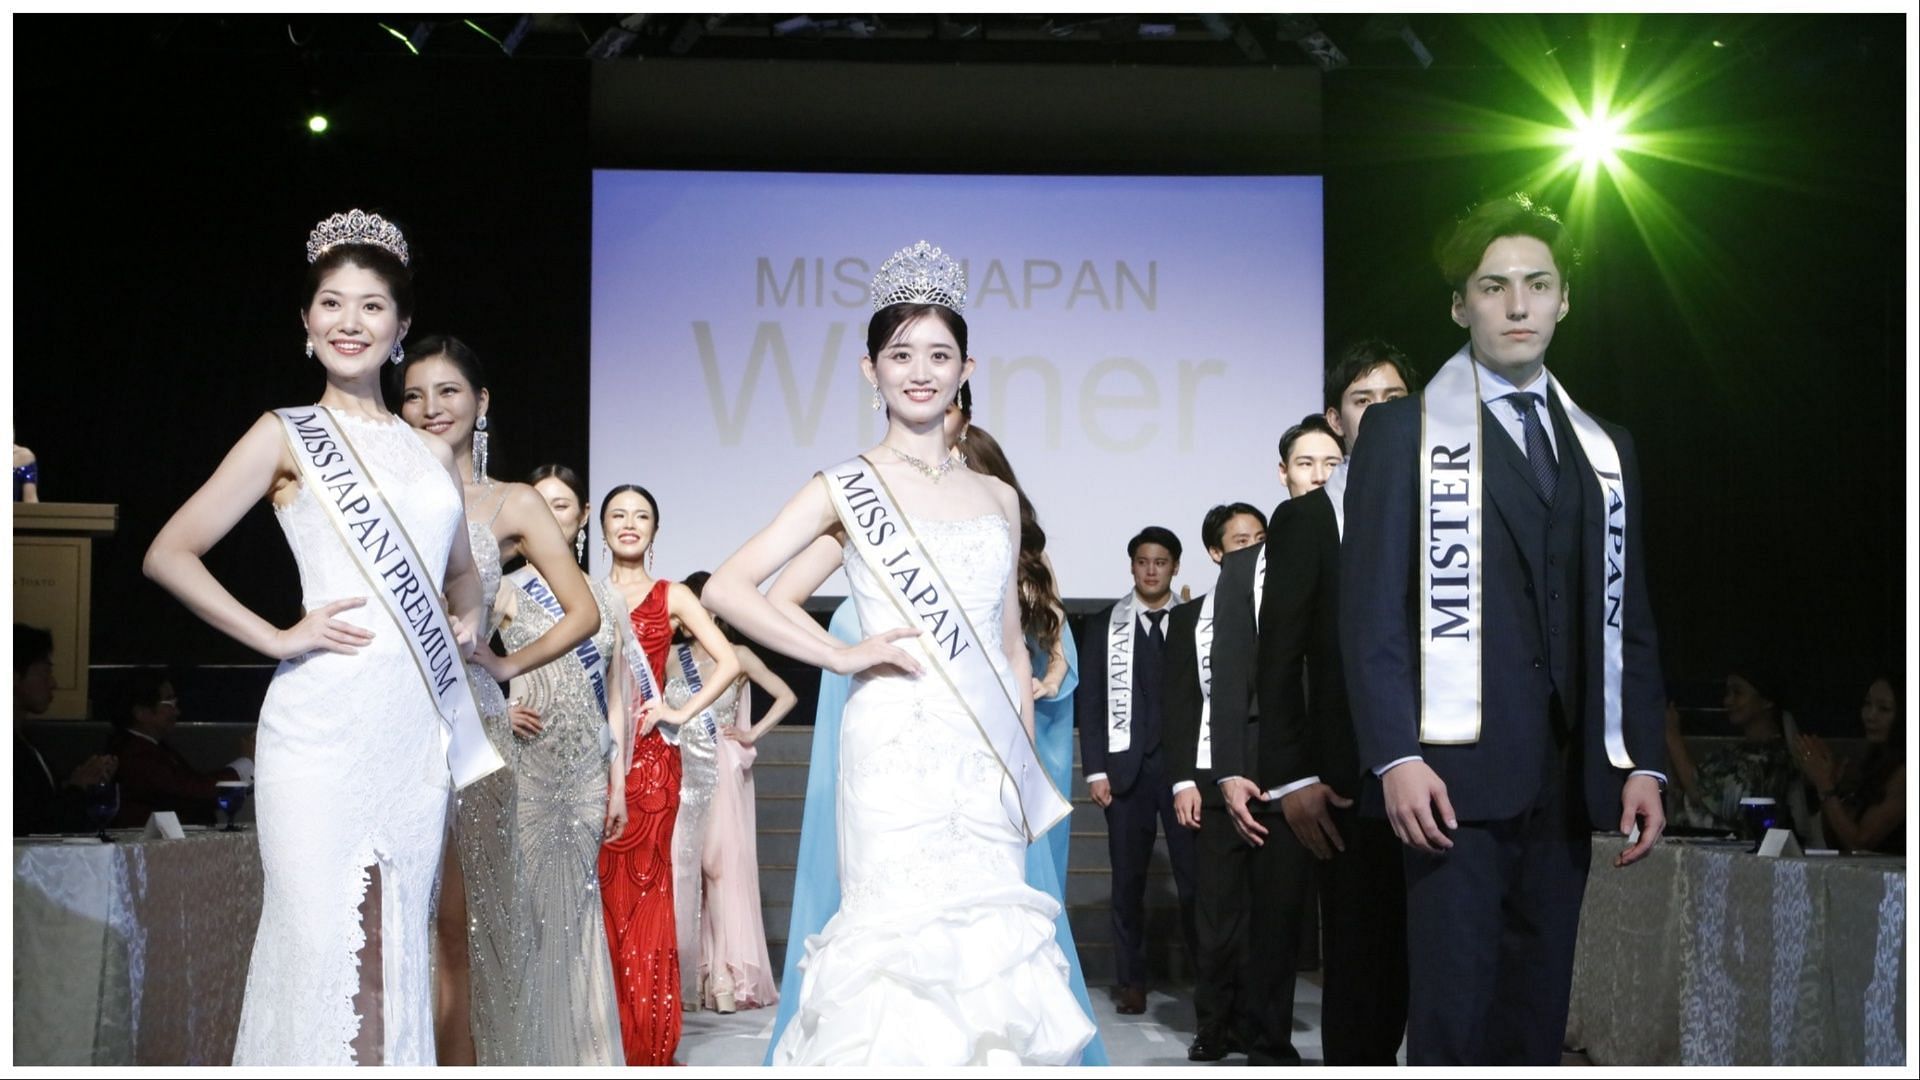 Carolina Shiino recently won the title of Miss Japan (Image via Facebook / MISS Japan)